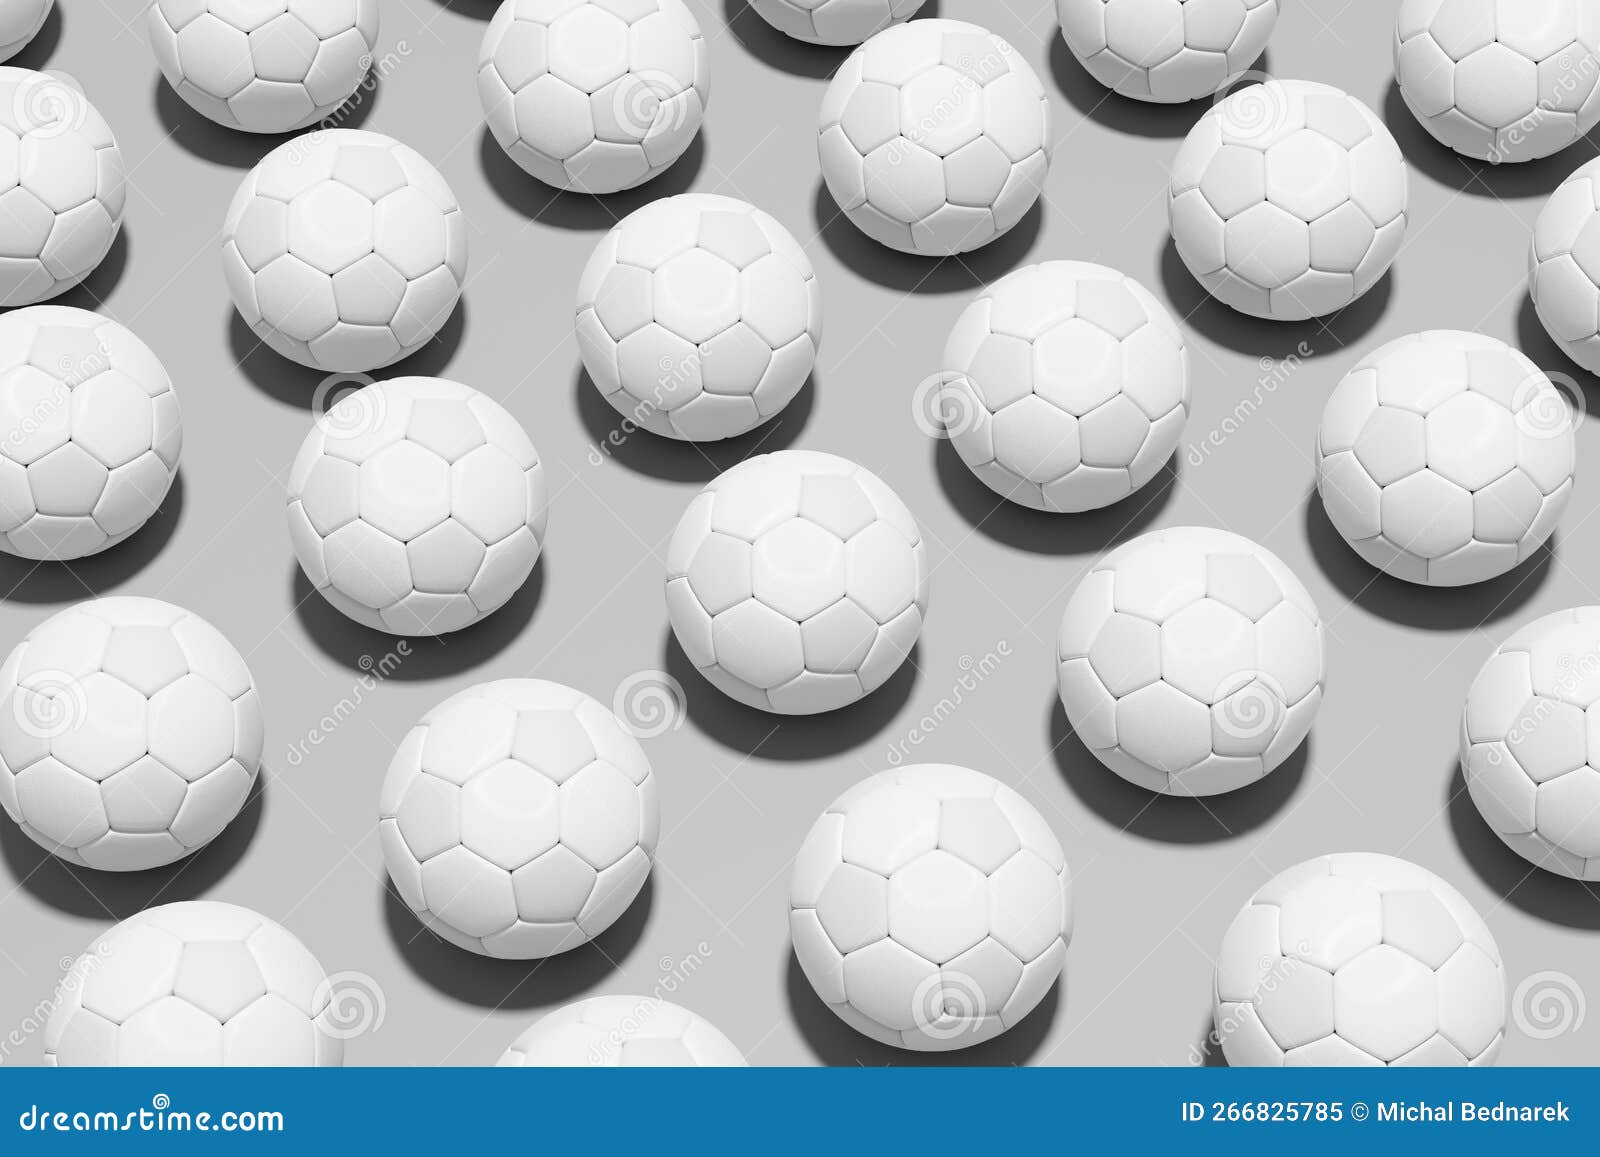 Football Soccer Balls Flat Lay Monochromatic Background Stock Image ...